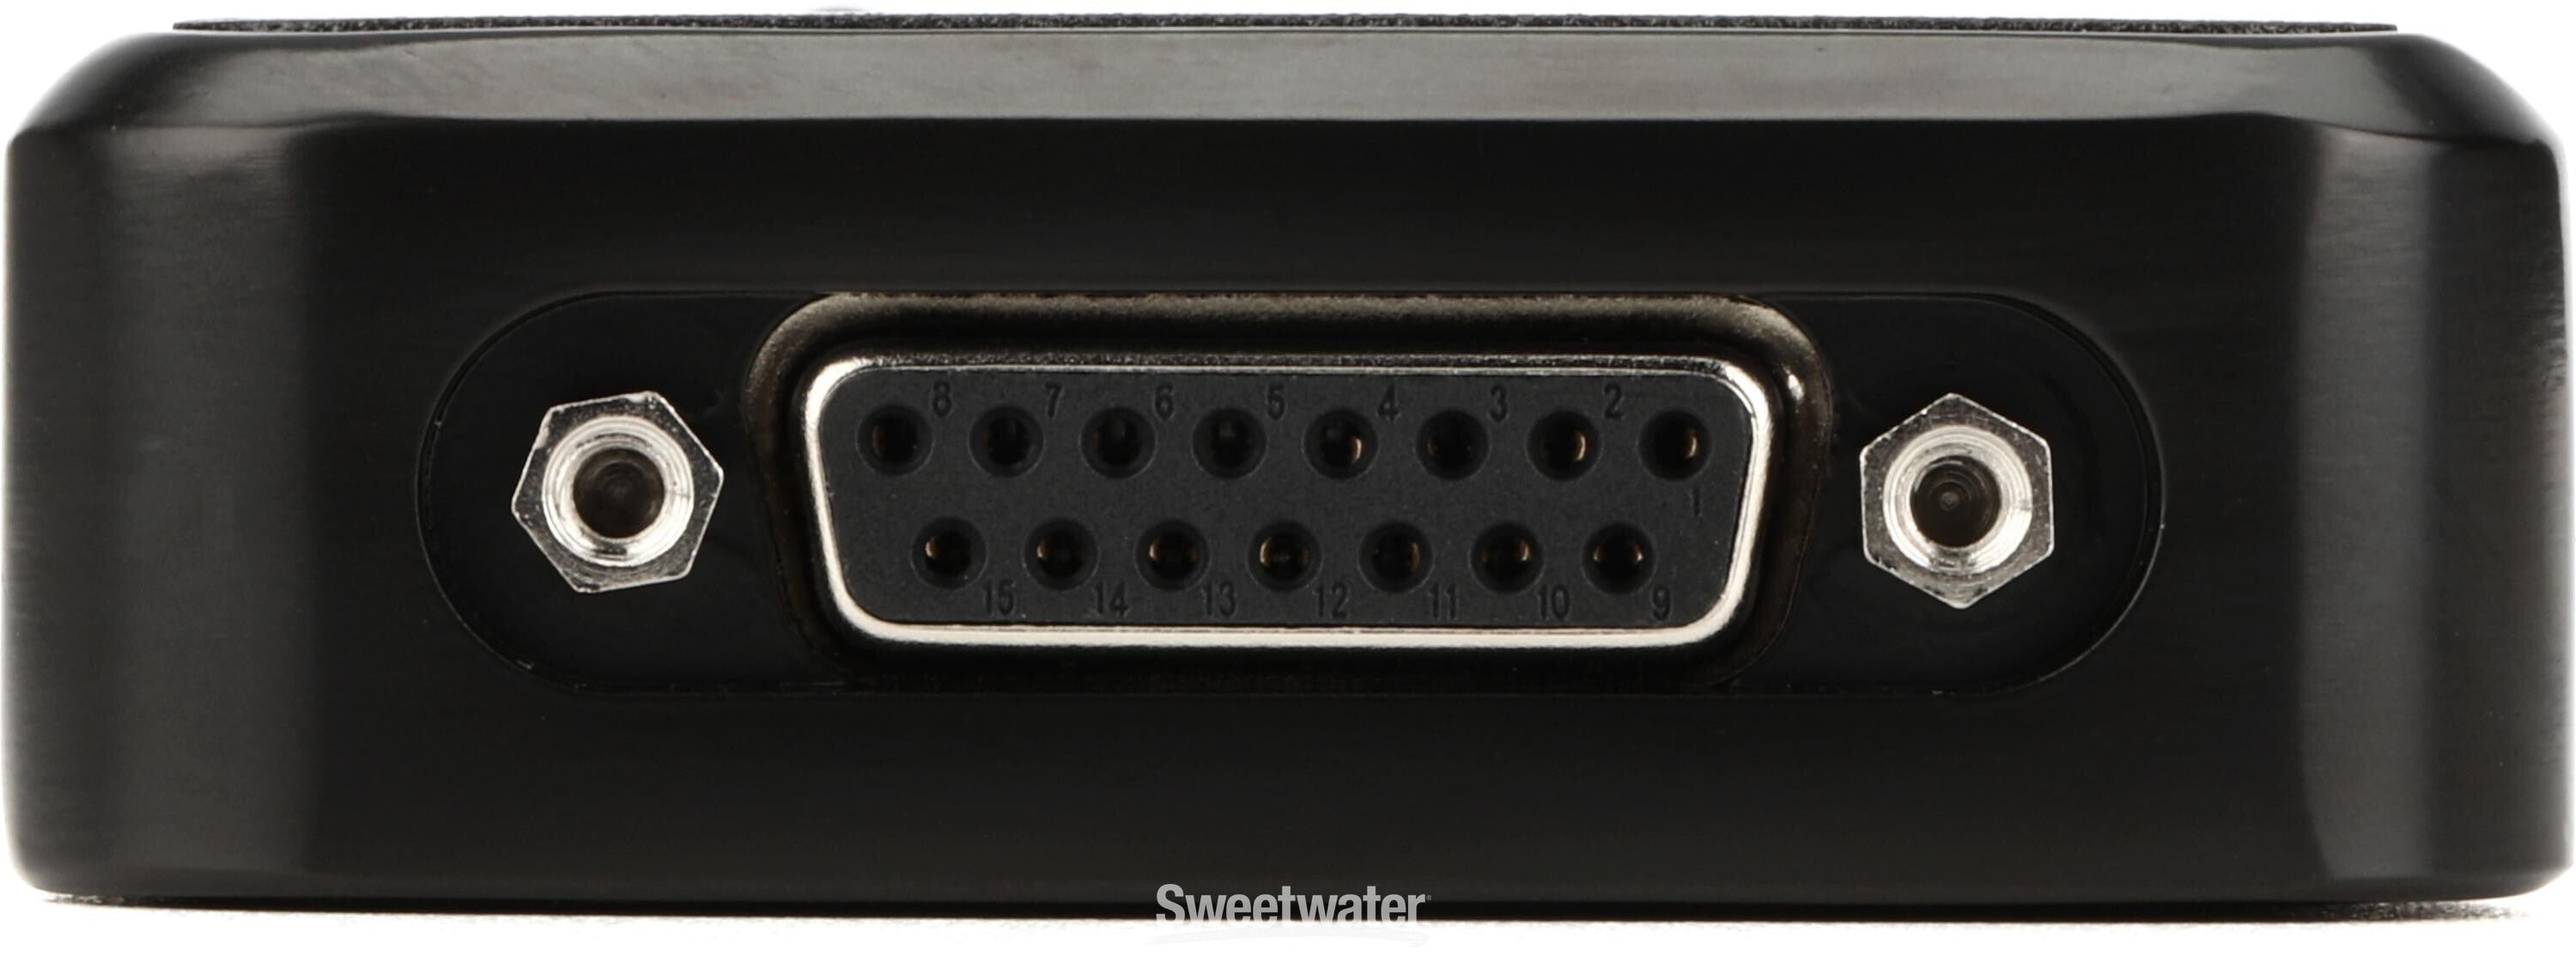 ENTTEC DMX USB Pro2 1024-Ch USB DMX Interface | Sweetwater